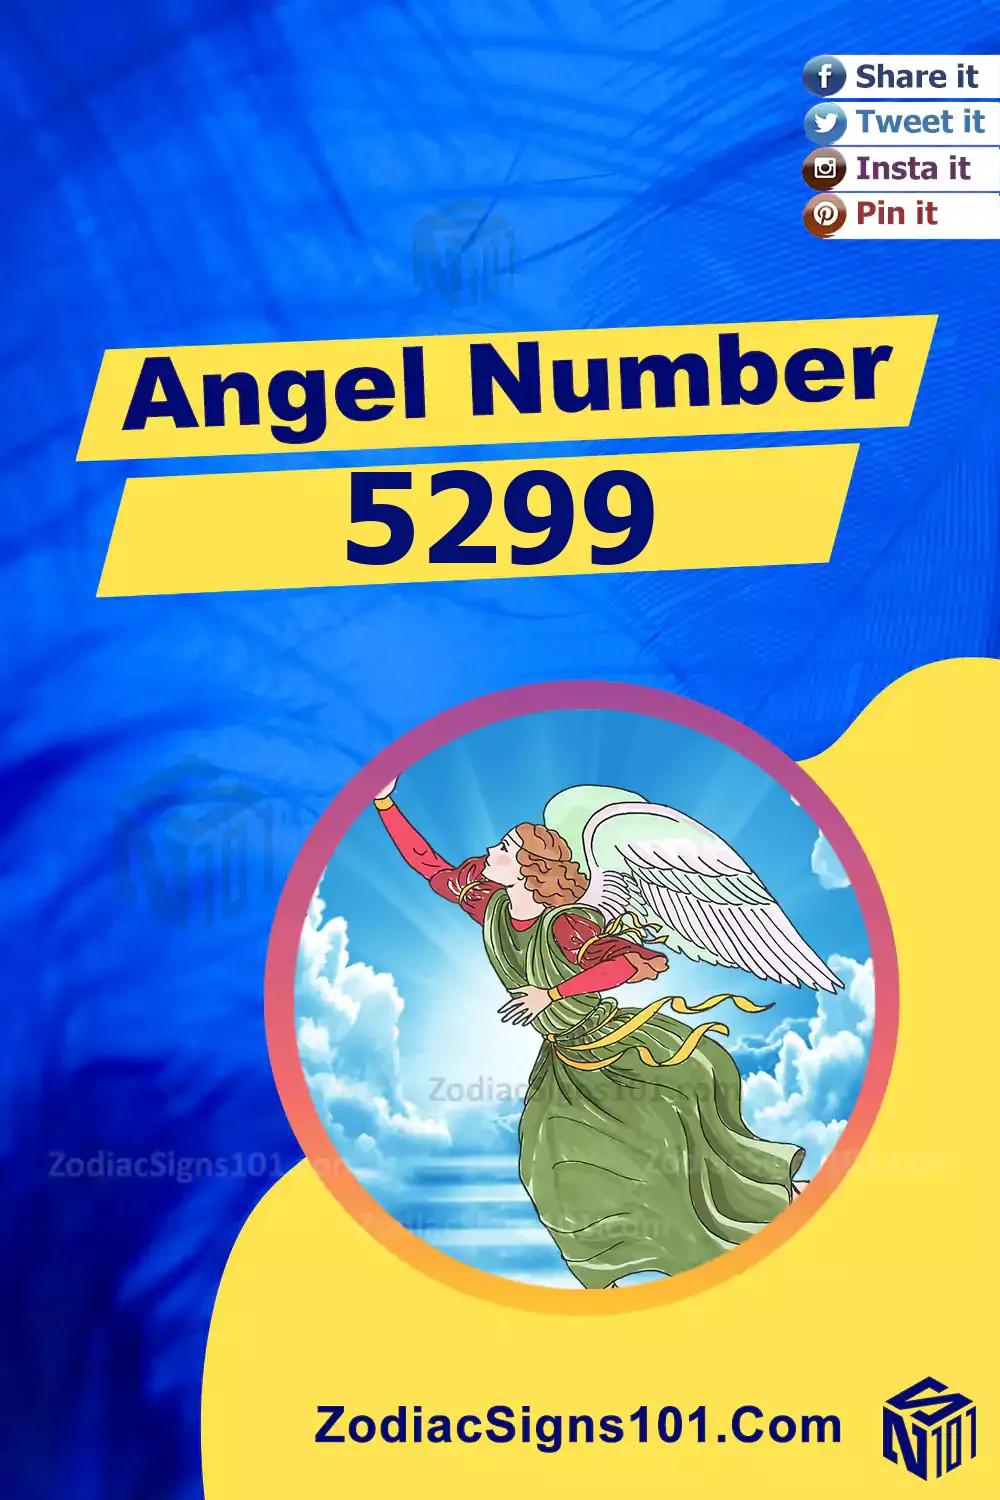 5299-Angel-Number-Meaning.jpg